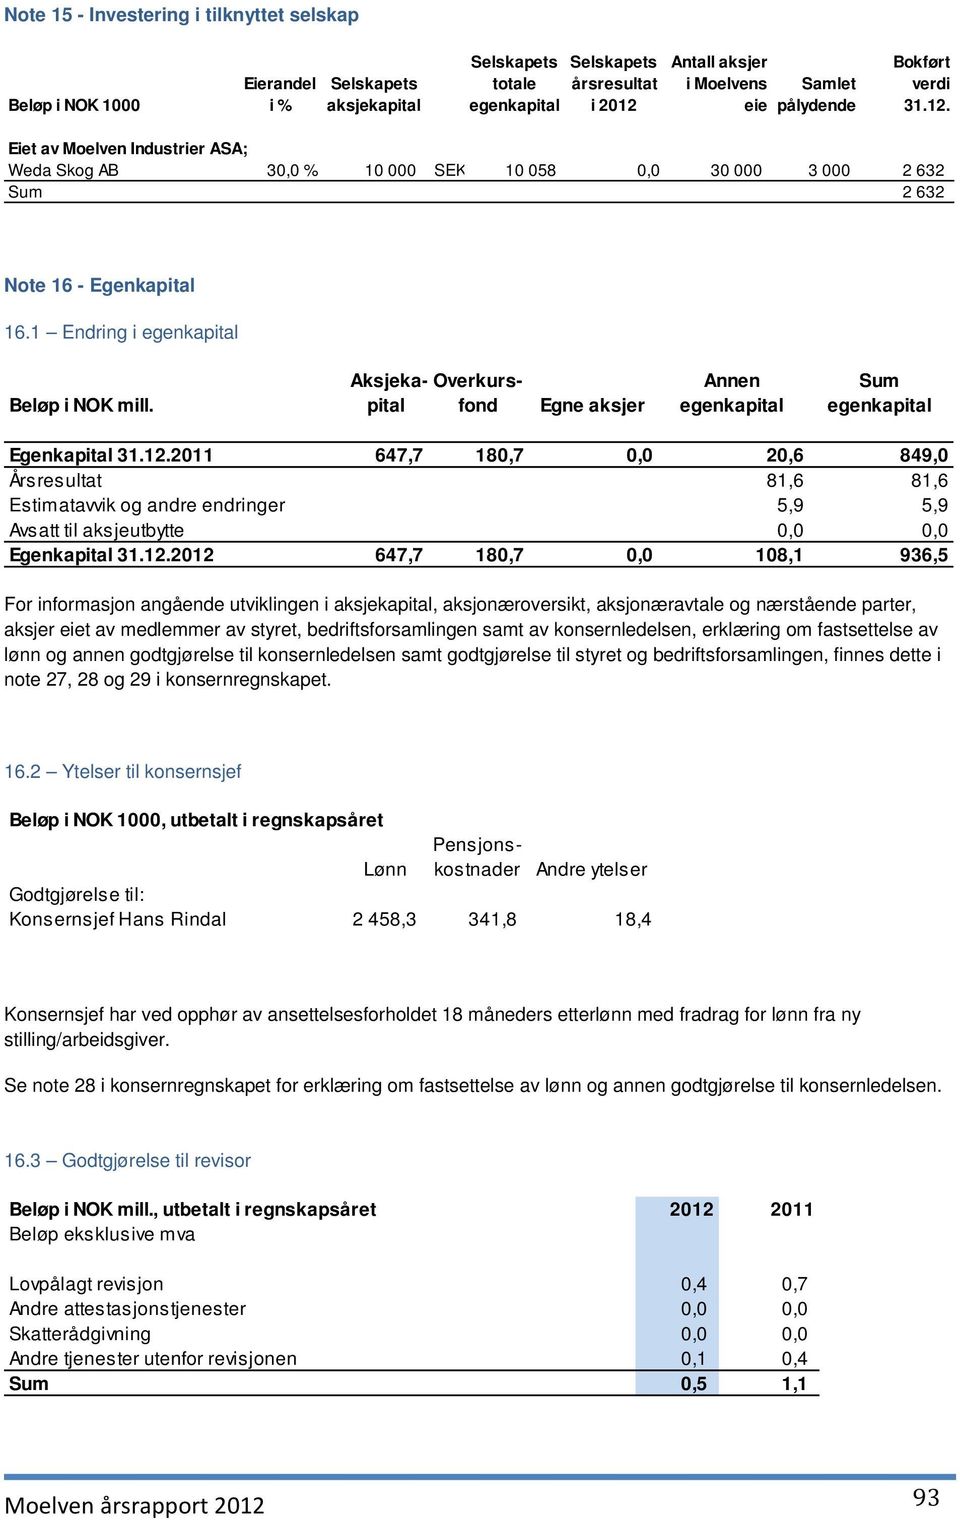 Aksjekapital Overkursfond Egne aksjer Annen egenkapital Sum egenkapital Egenkapital 31.12.